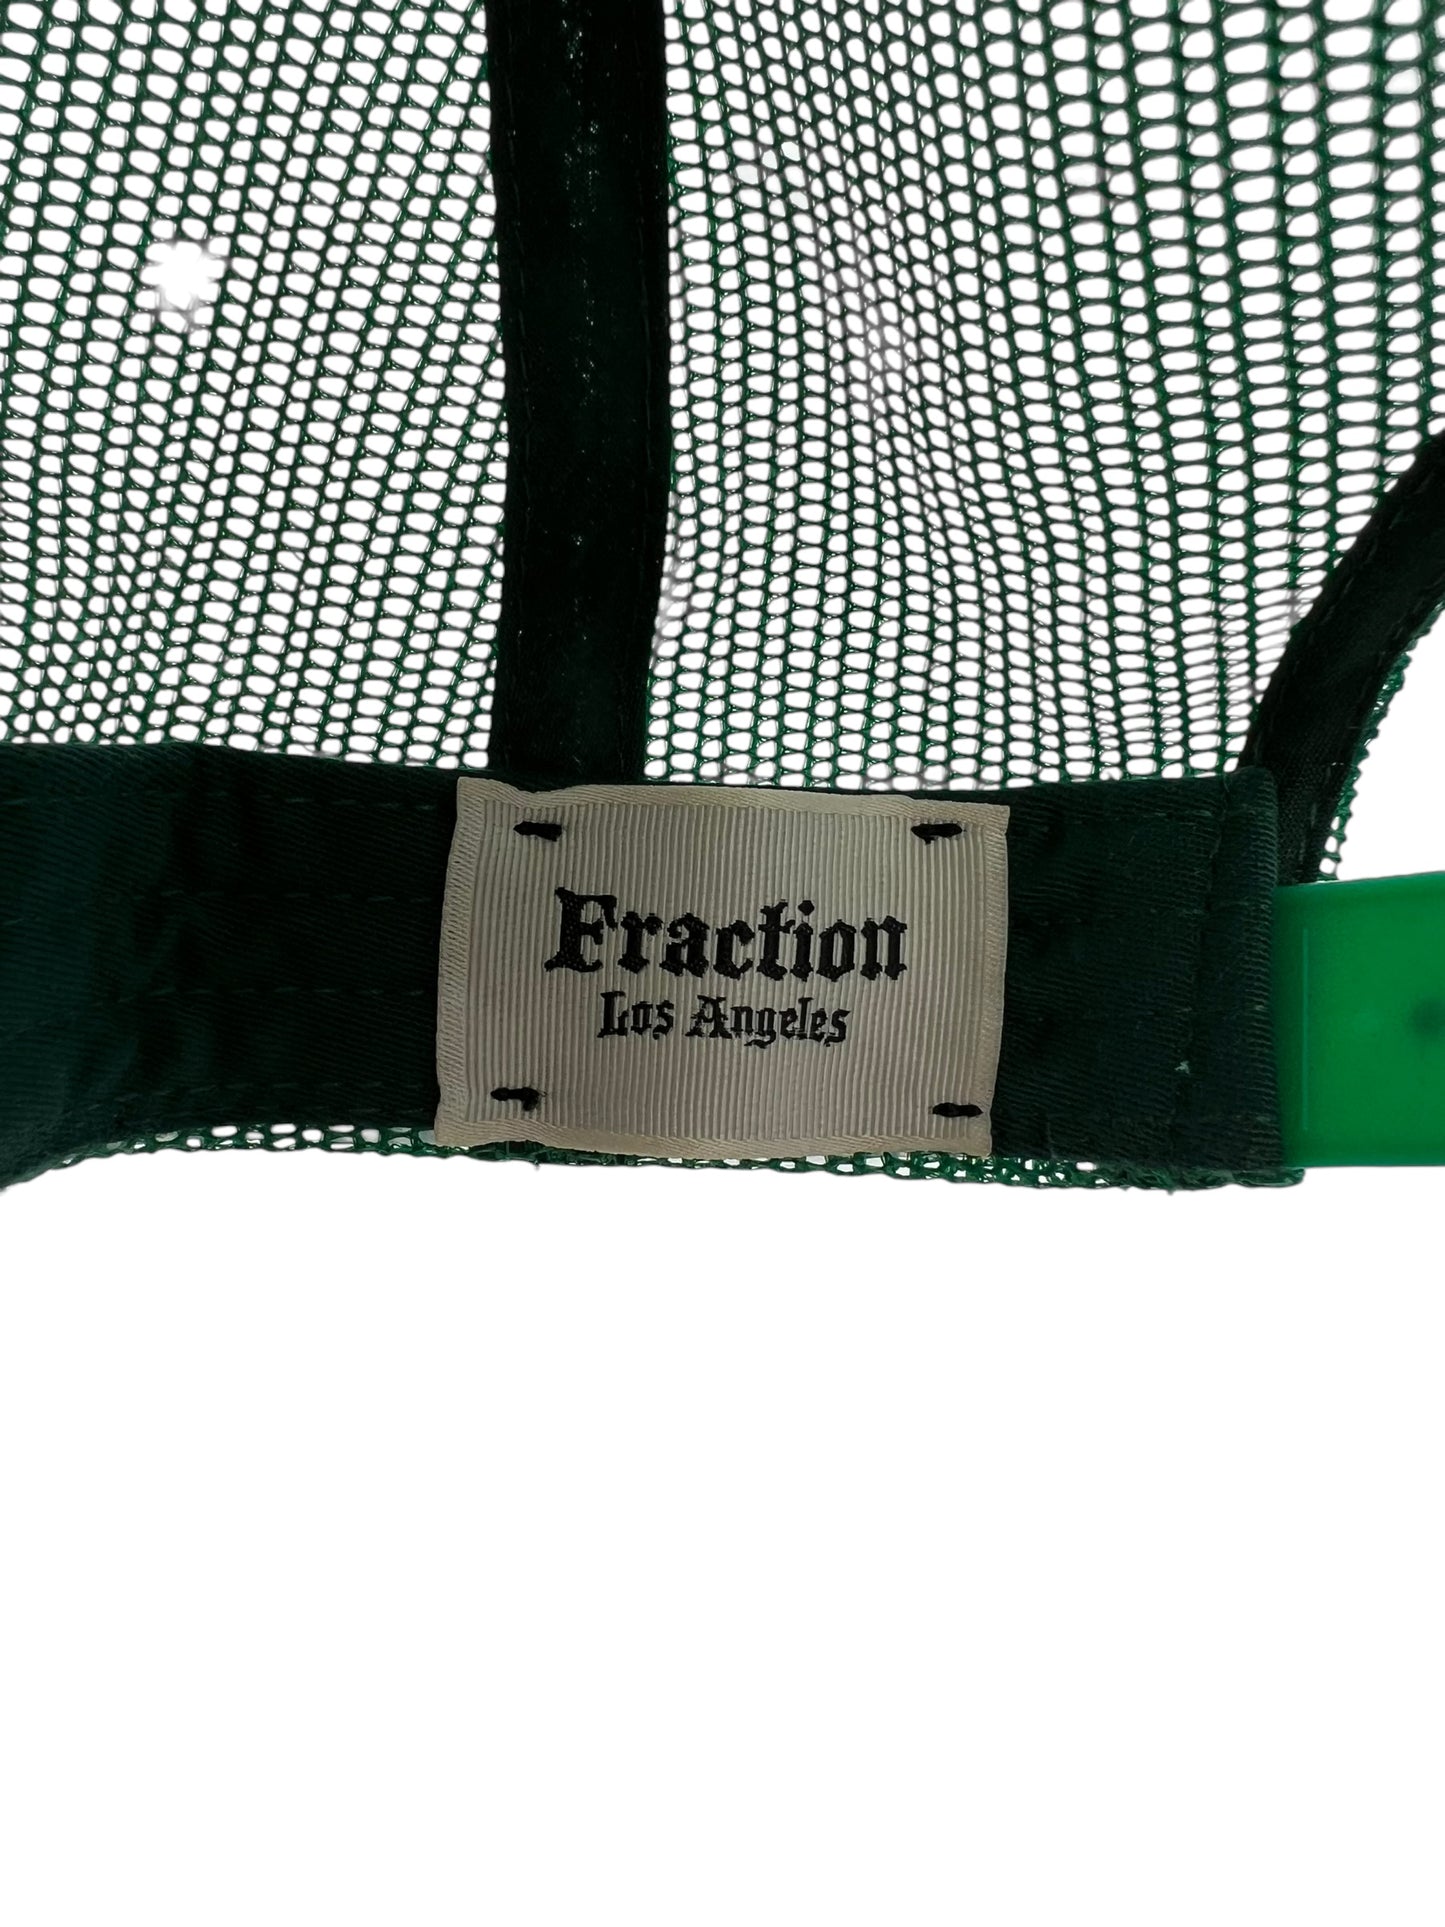 Fraction LA Smily 2.0 Hat in Green